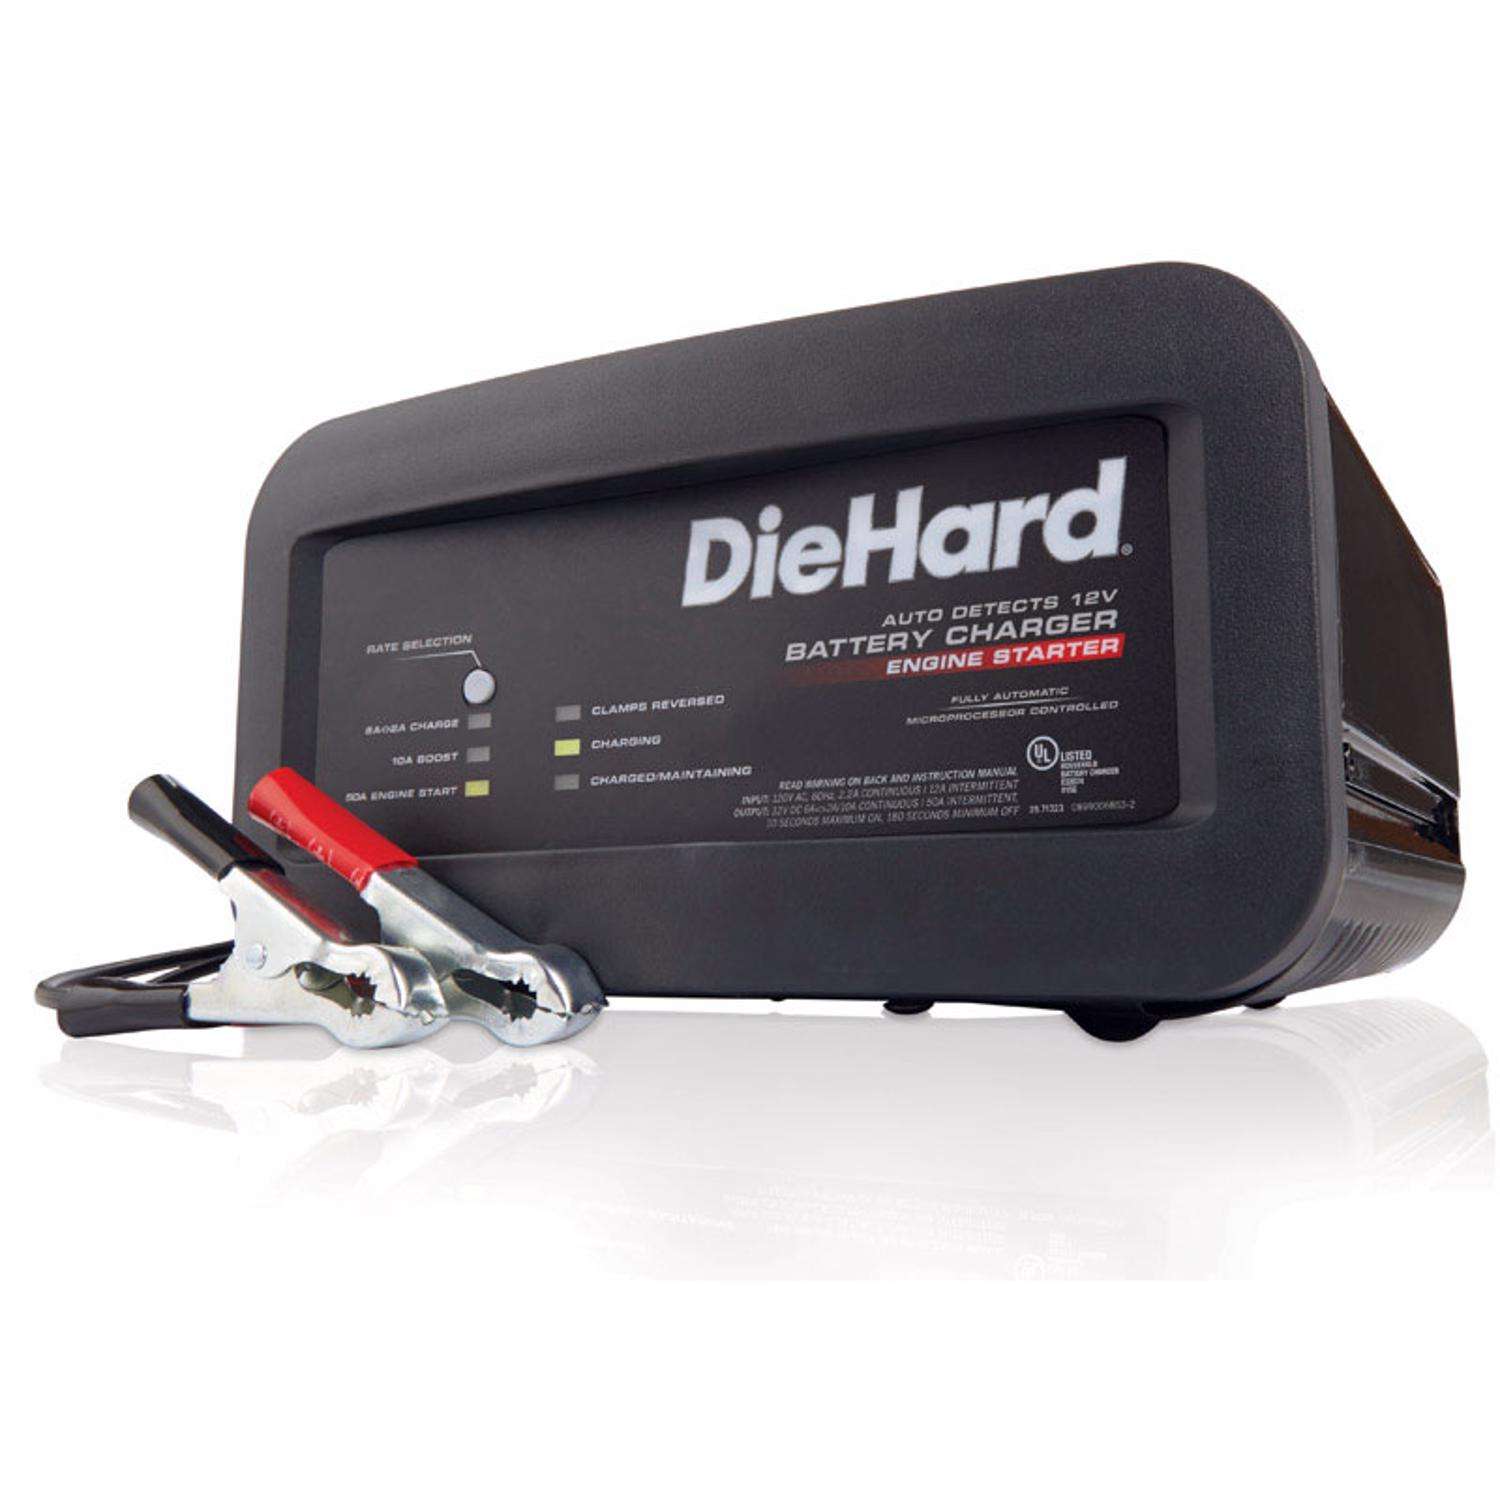 DieHard Car Battery Jump Starter Automatic 400 amps - Ace Hardware